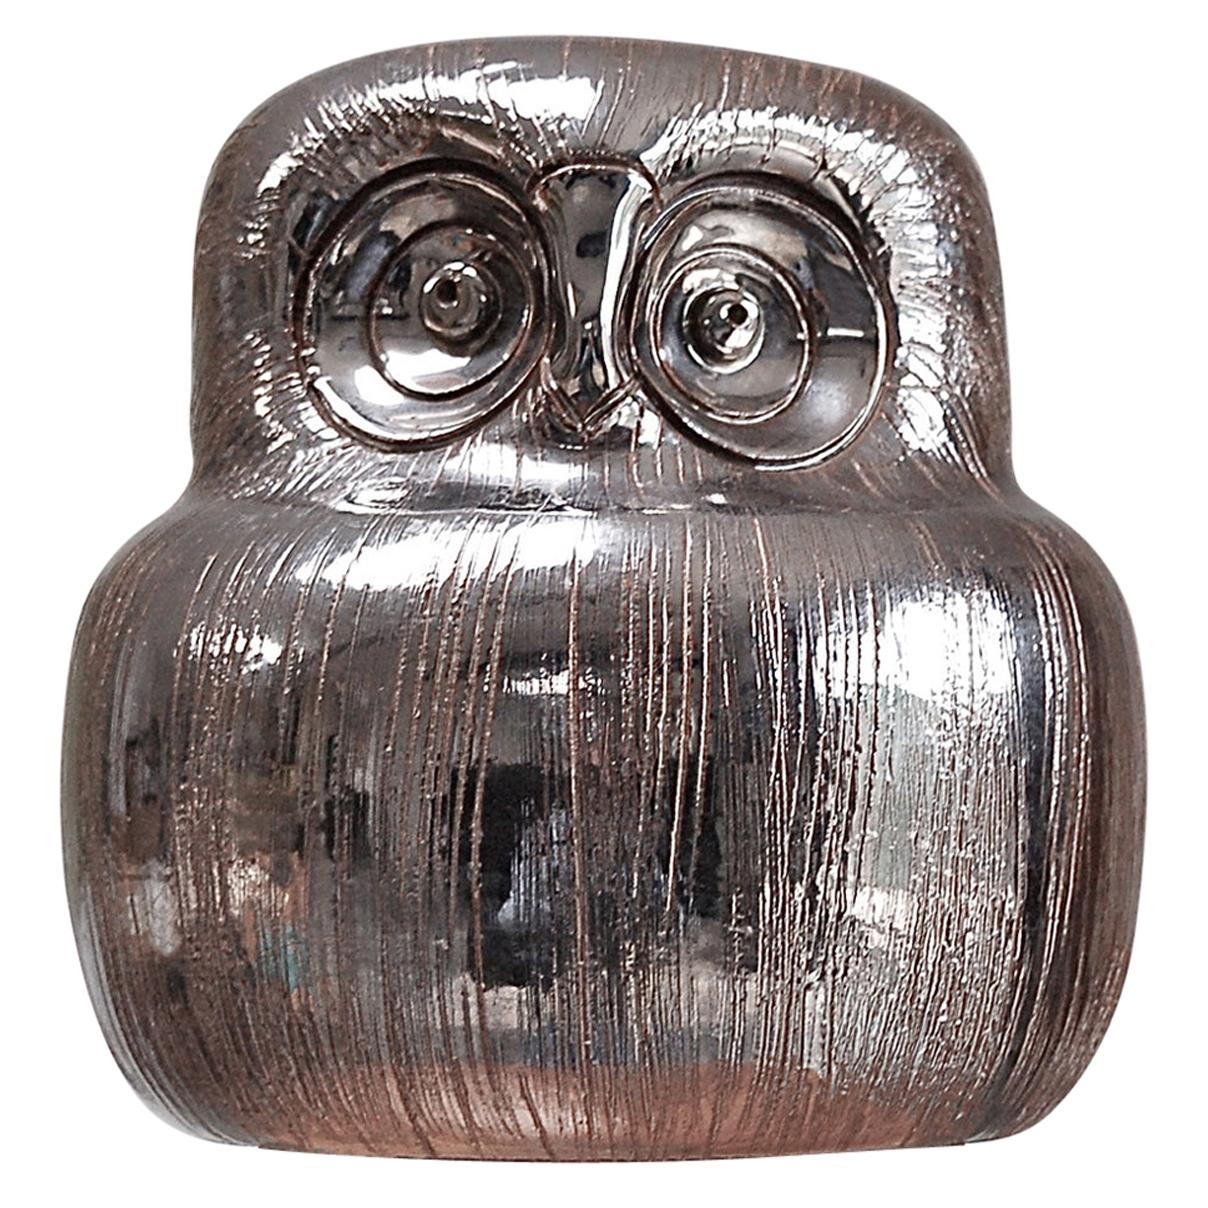 Ceramic Owl Sculpture in Silver Glaze by Aldo Londi for Bitossi, 1960s Italy For Sale